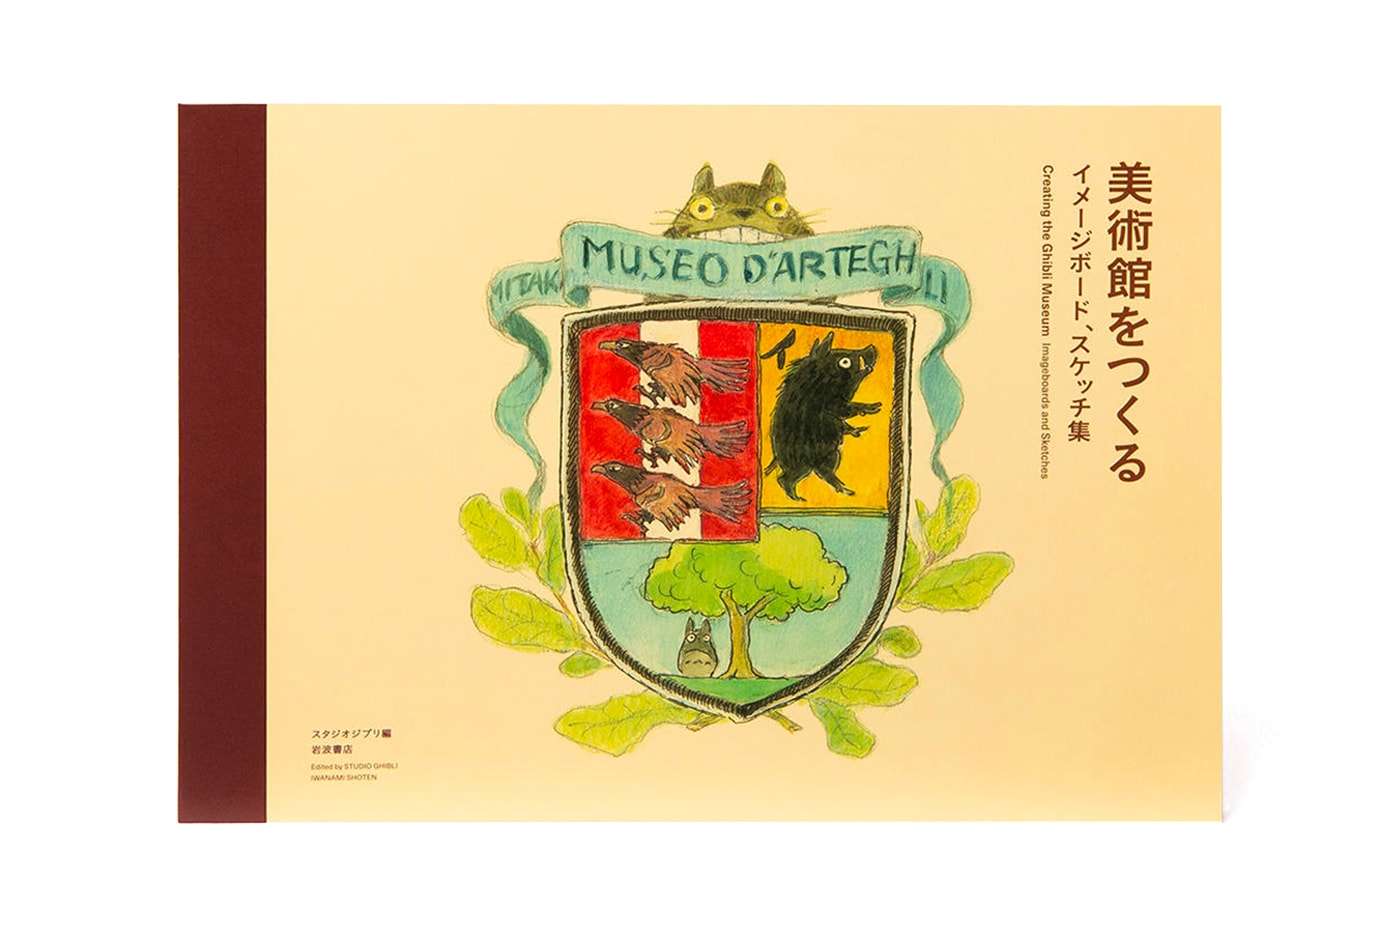 miyazaki hayao studio ghibli museum illustration art book info Mitaka two volume drawings imageboards artwork renderings exhibitions